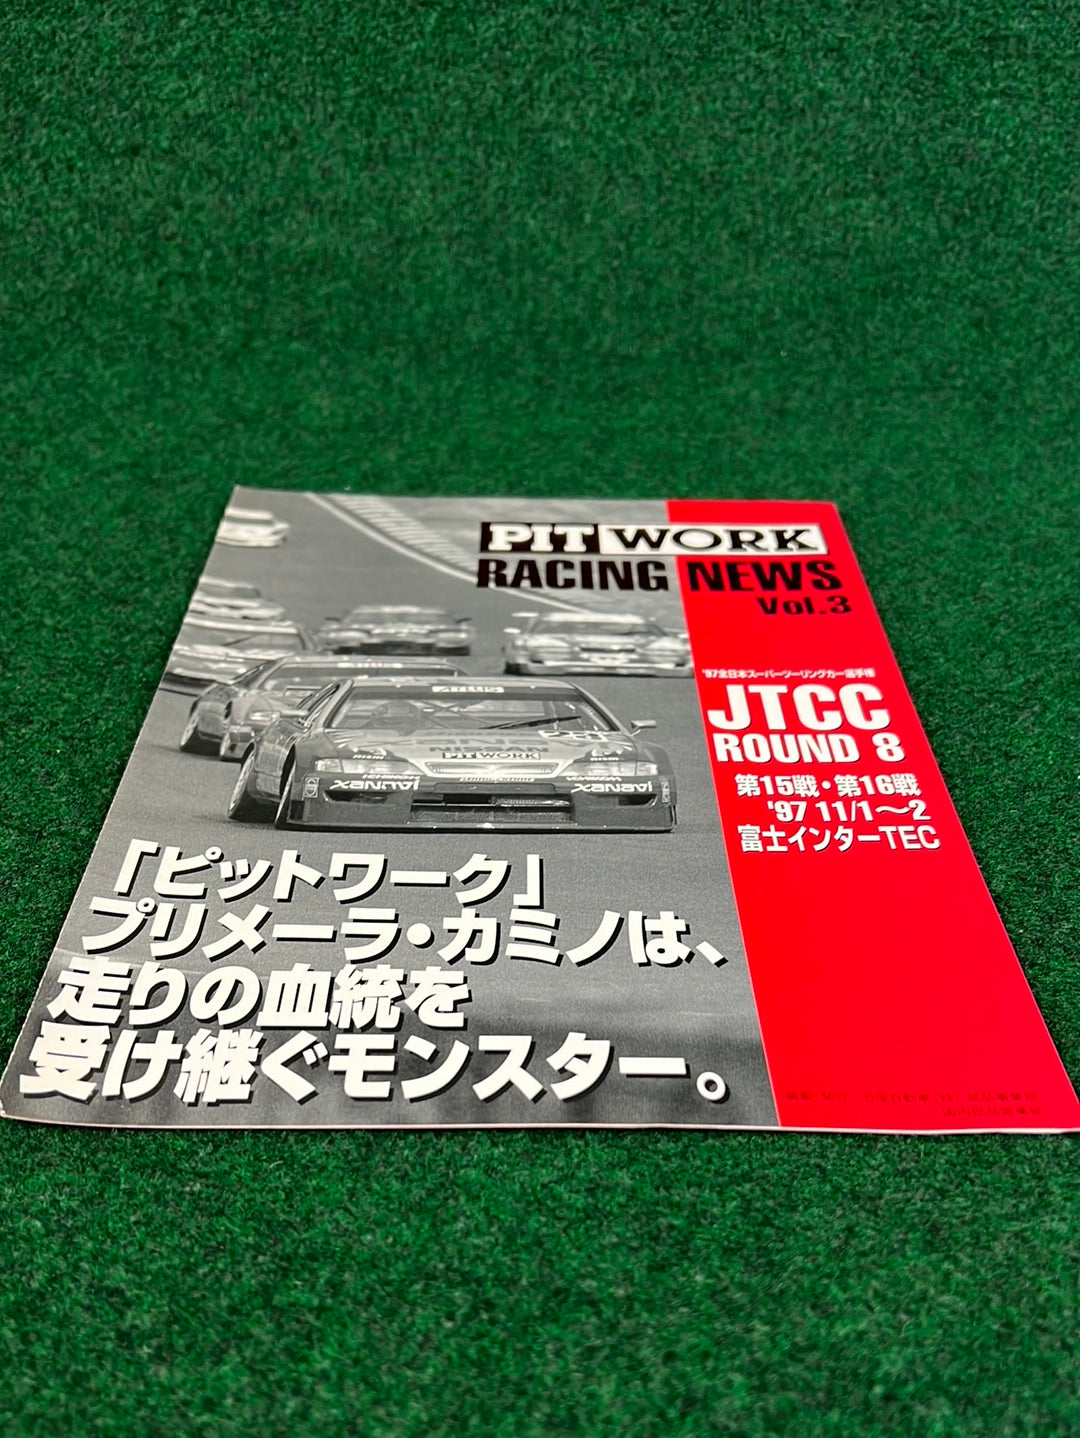 Pitwork - JTCC Racing News Series & Event Information Flyers Set of 3